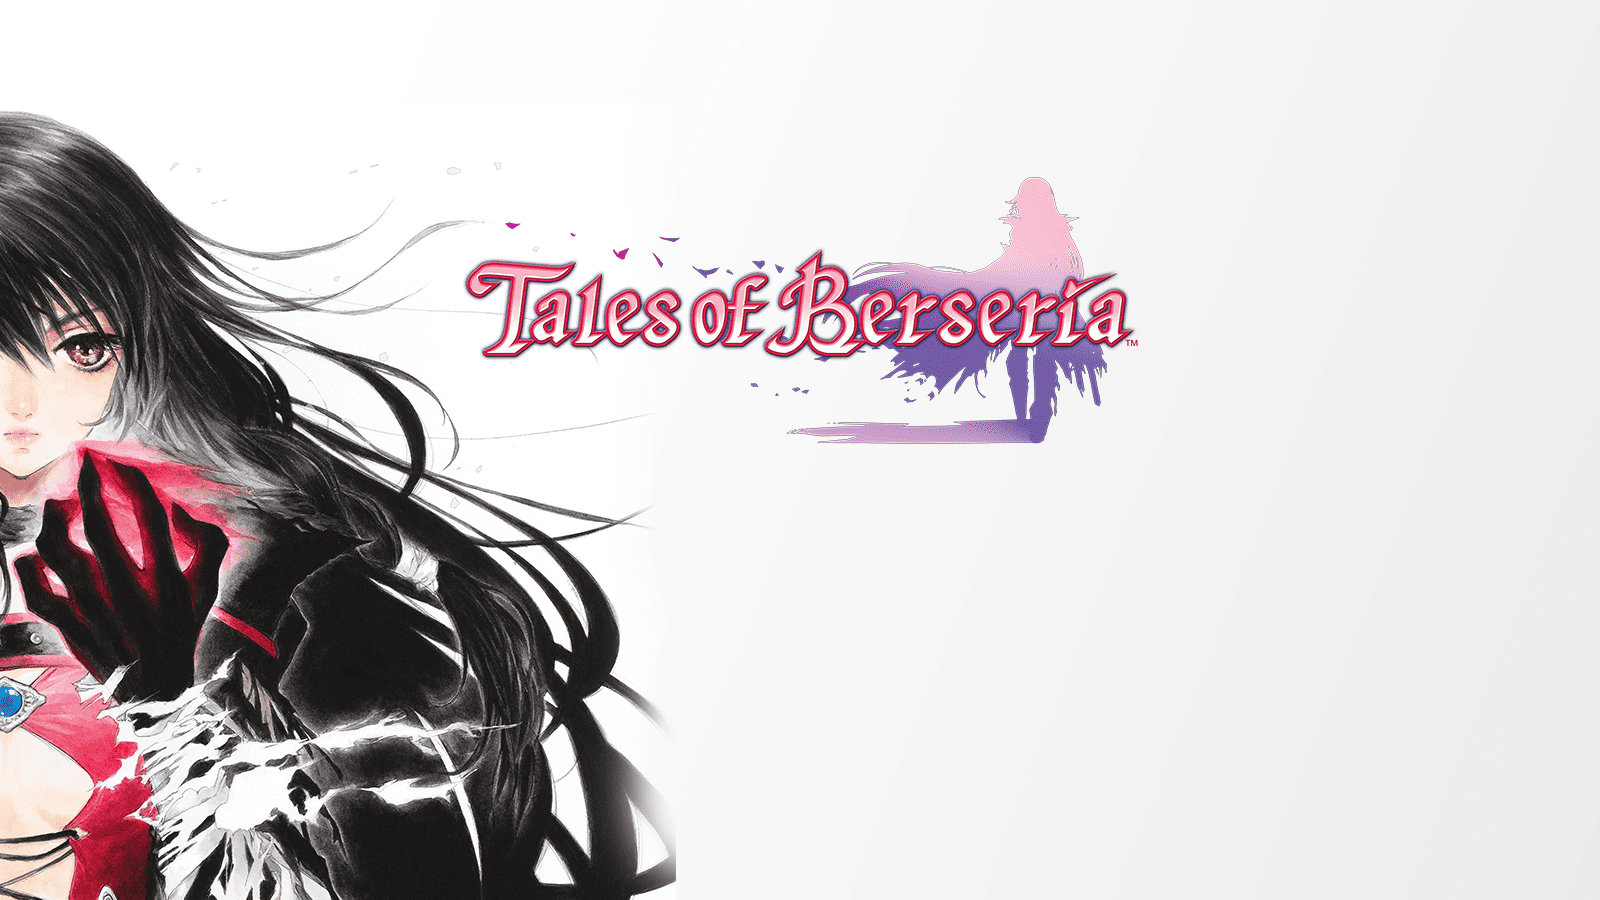 download free tales of berseria steam